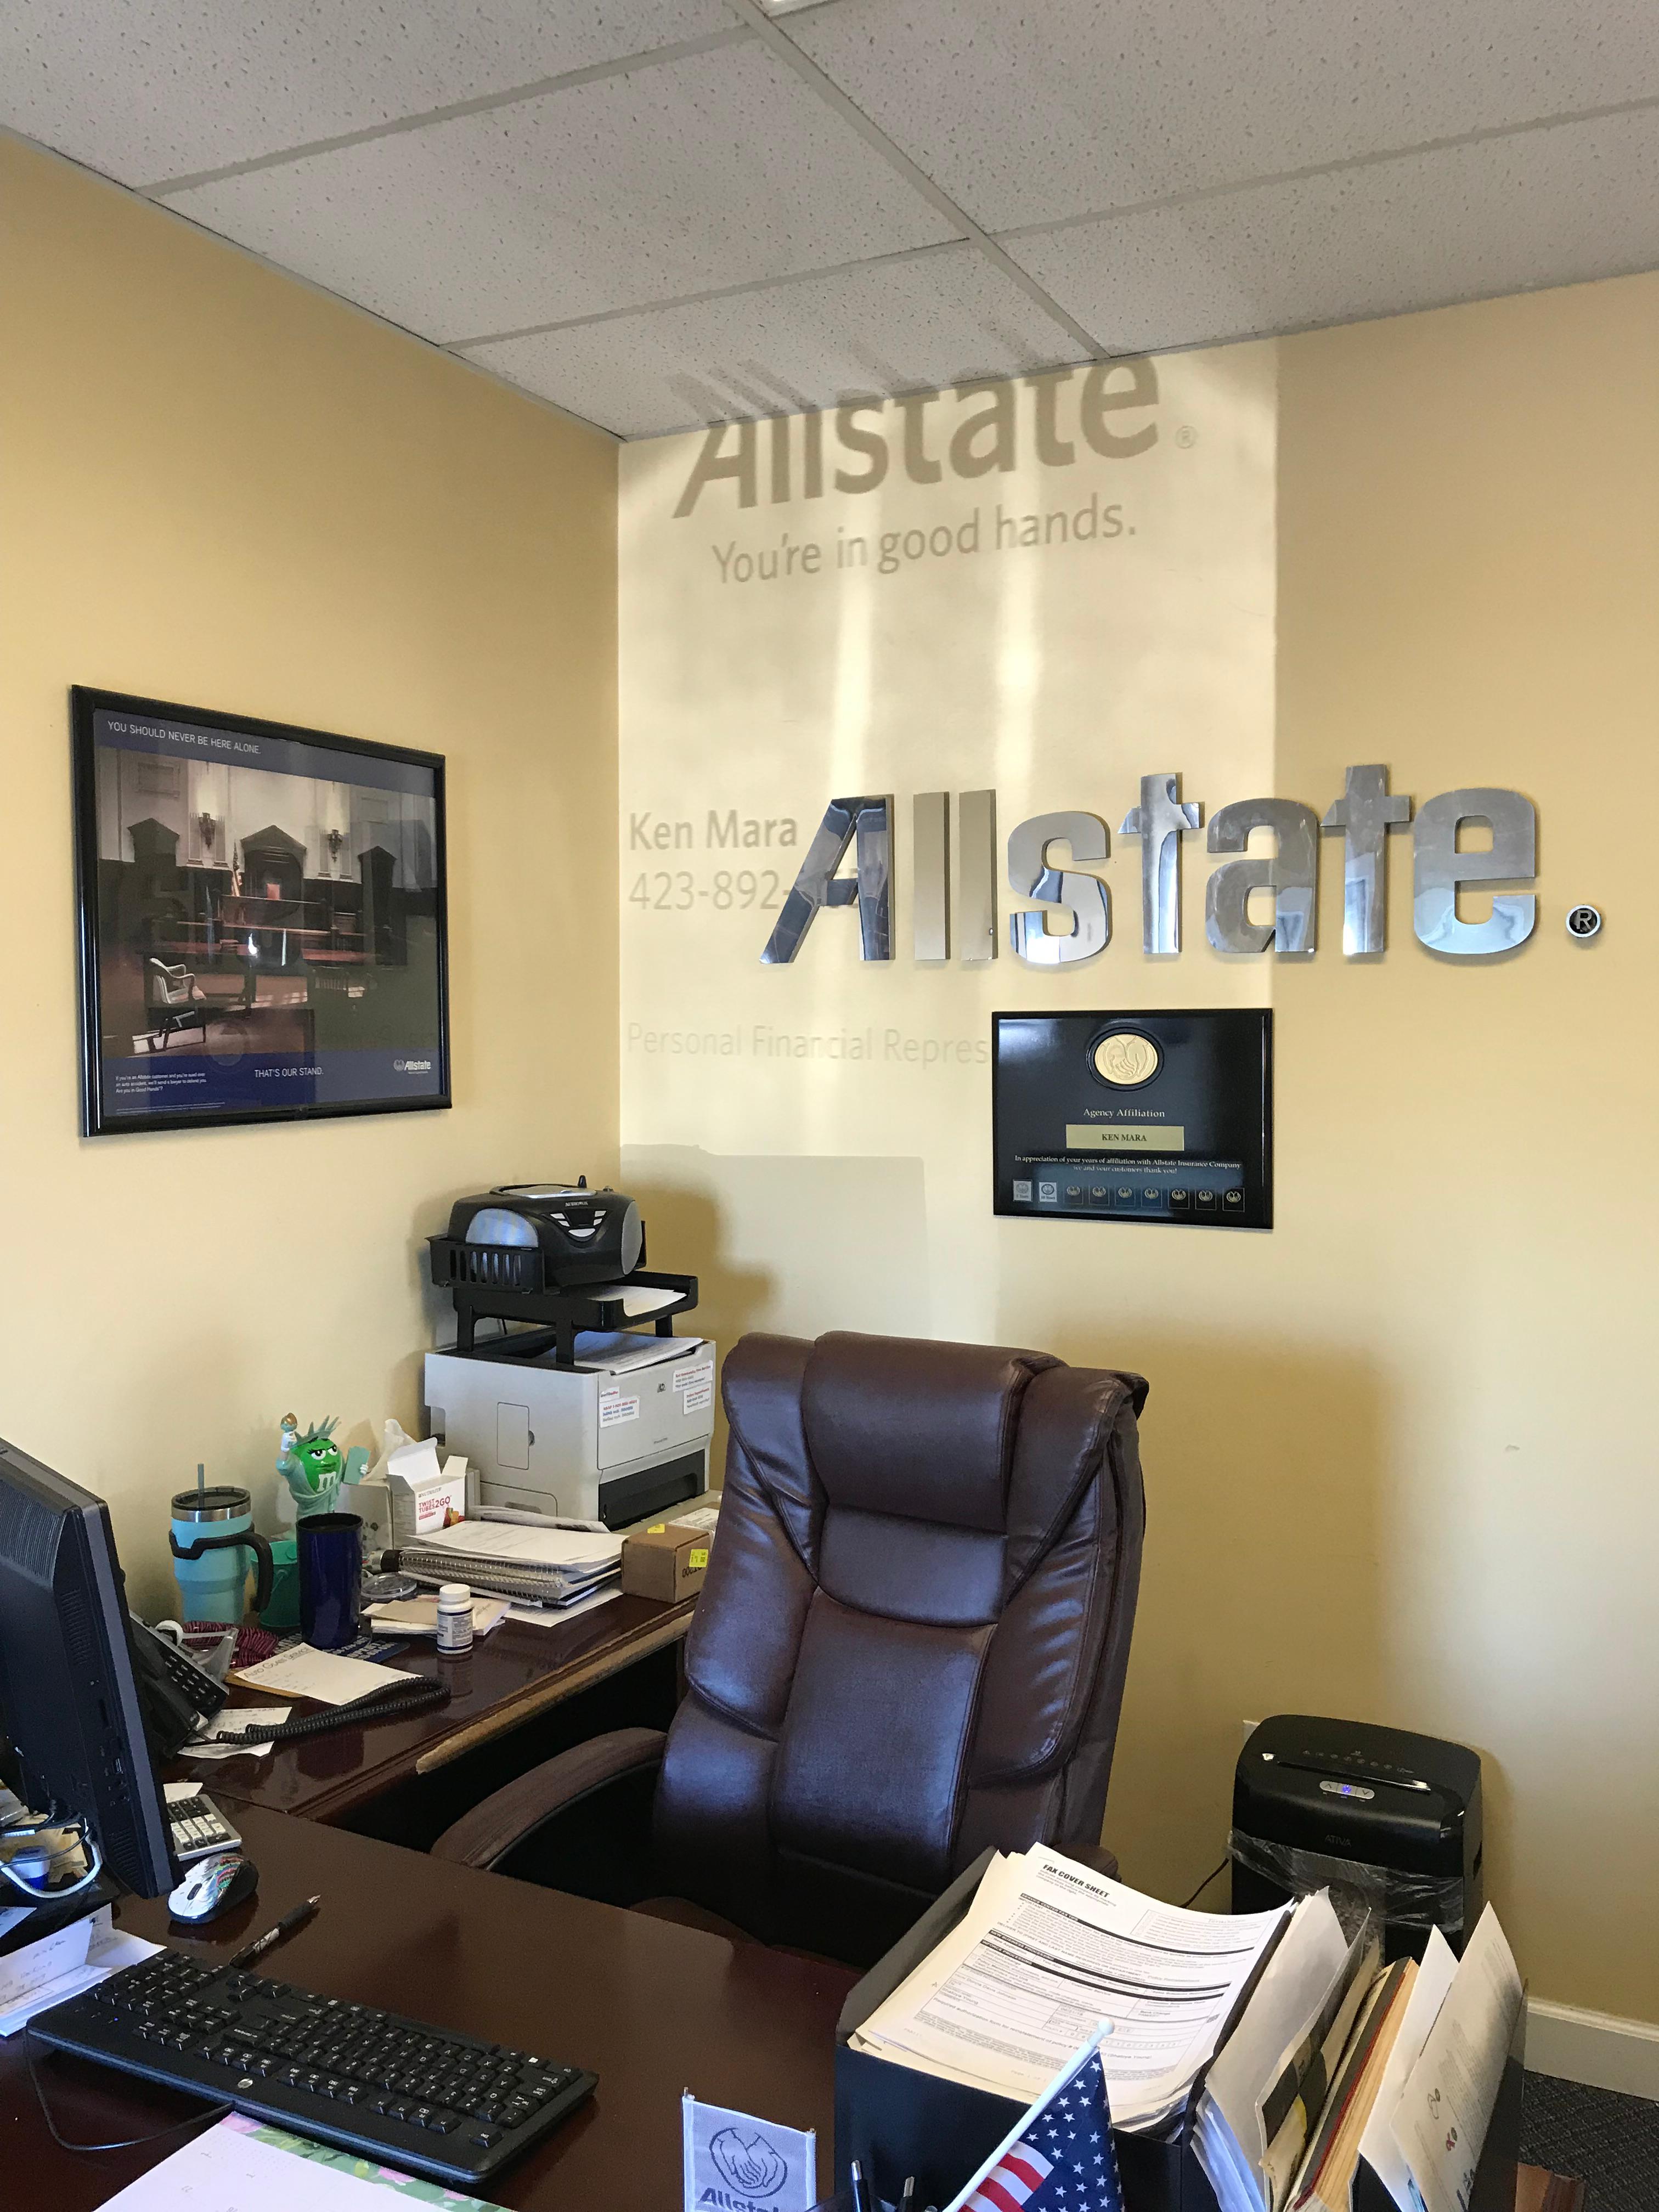 Ken Mara: Allstate Insurance Photo